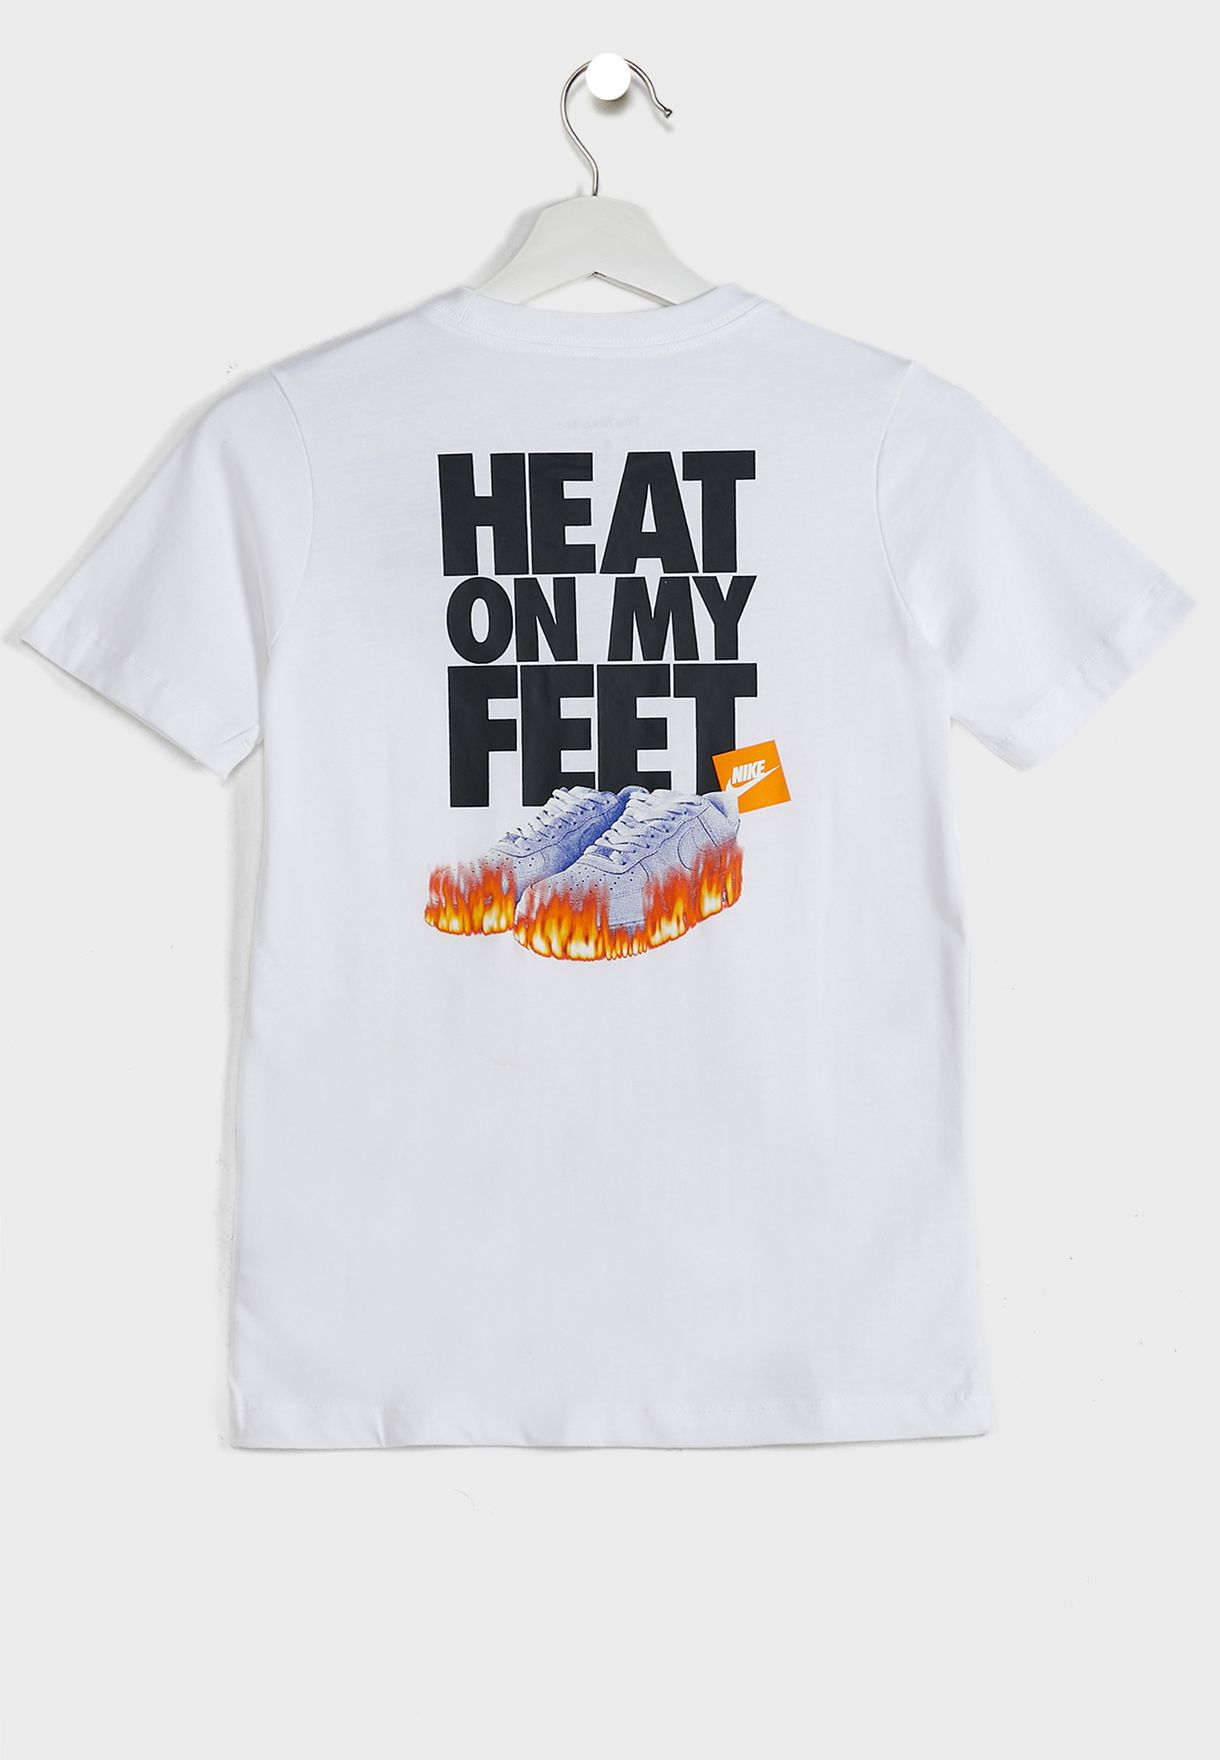 Youth Nsw Heat On Feet T-Shirt